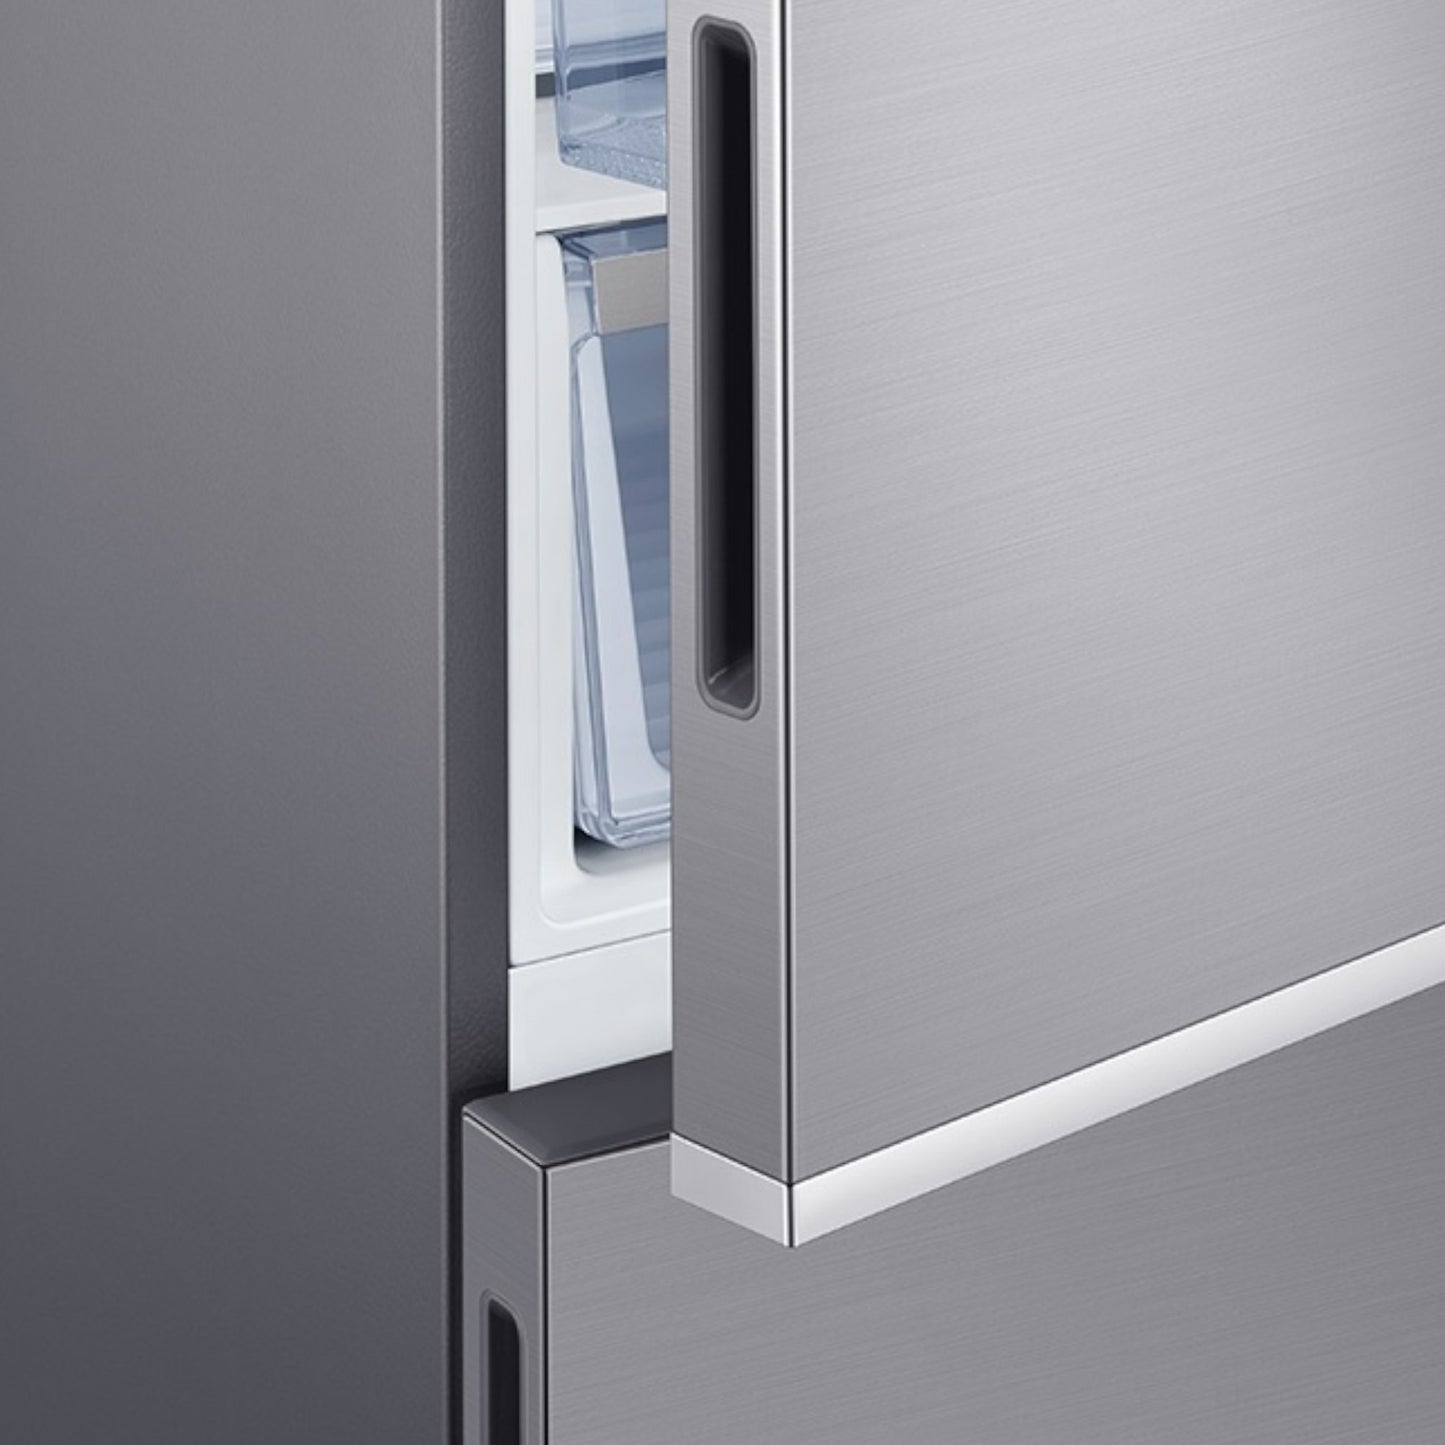 Refrigerador Bottom Freezer RB30N4020S8/ZS 290 Lts Samsung